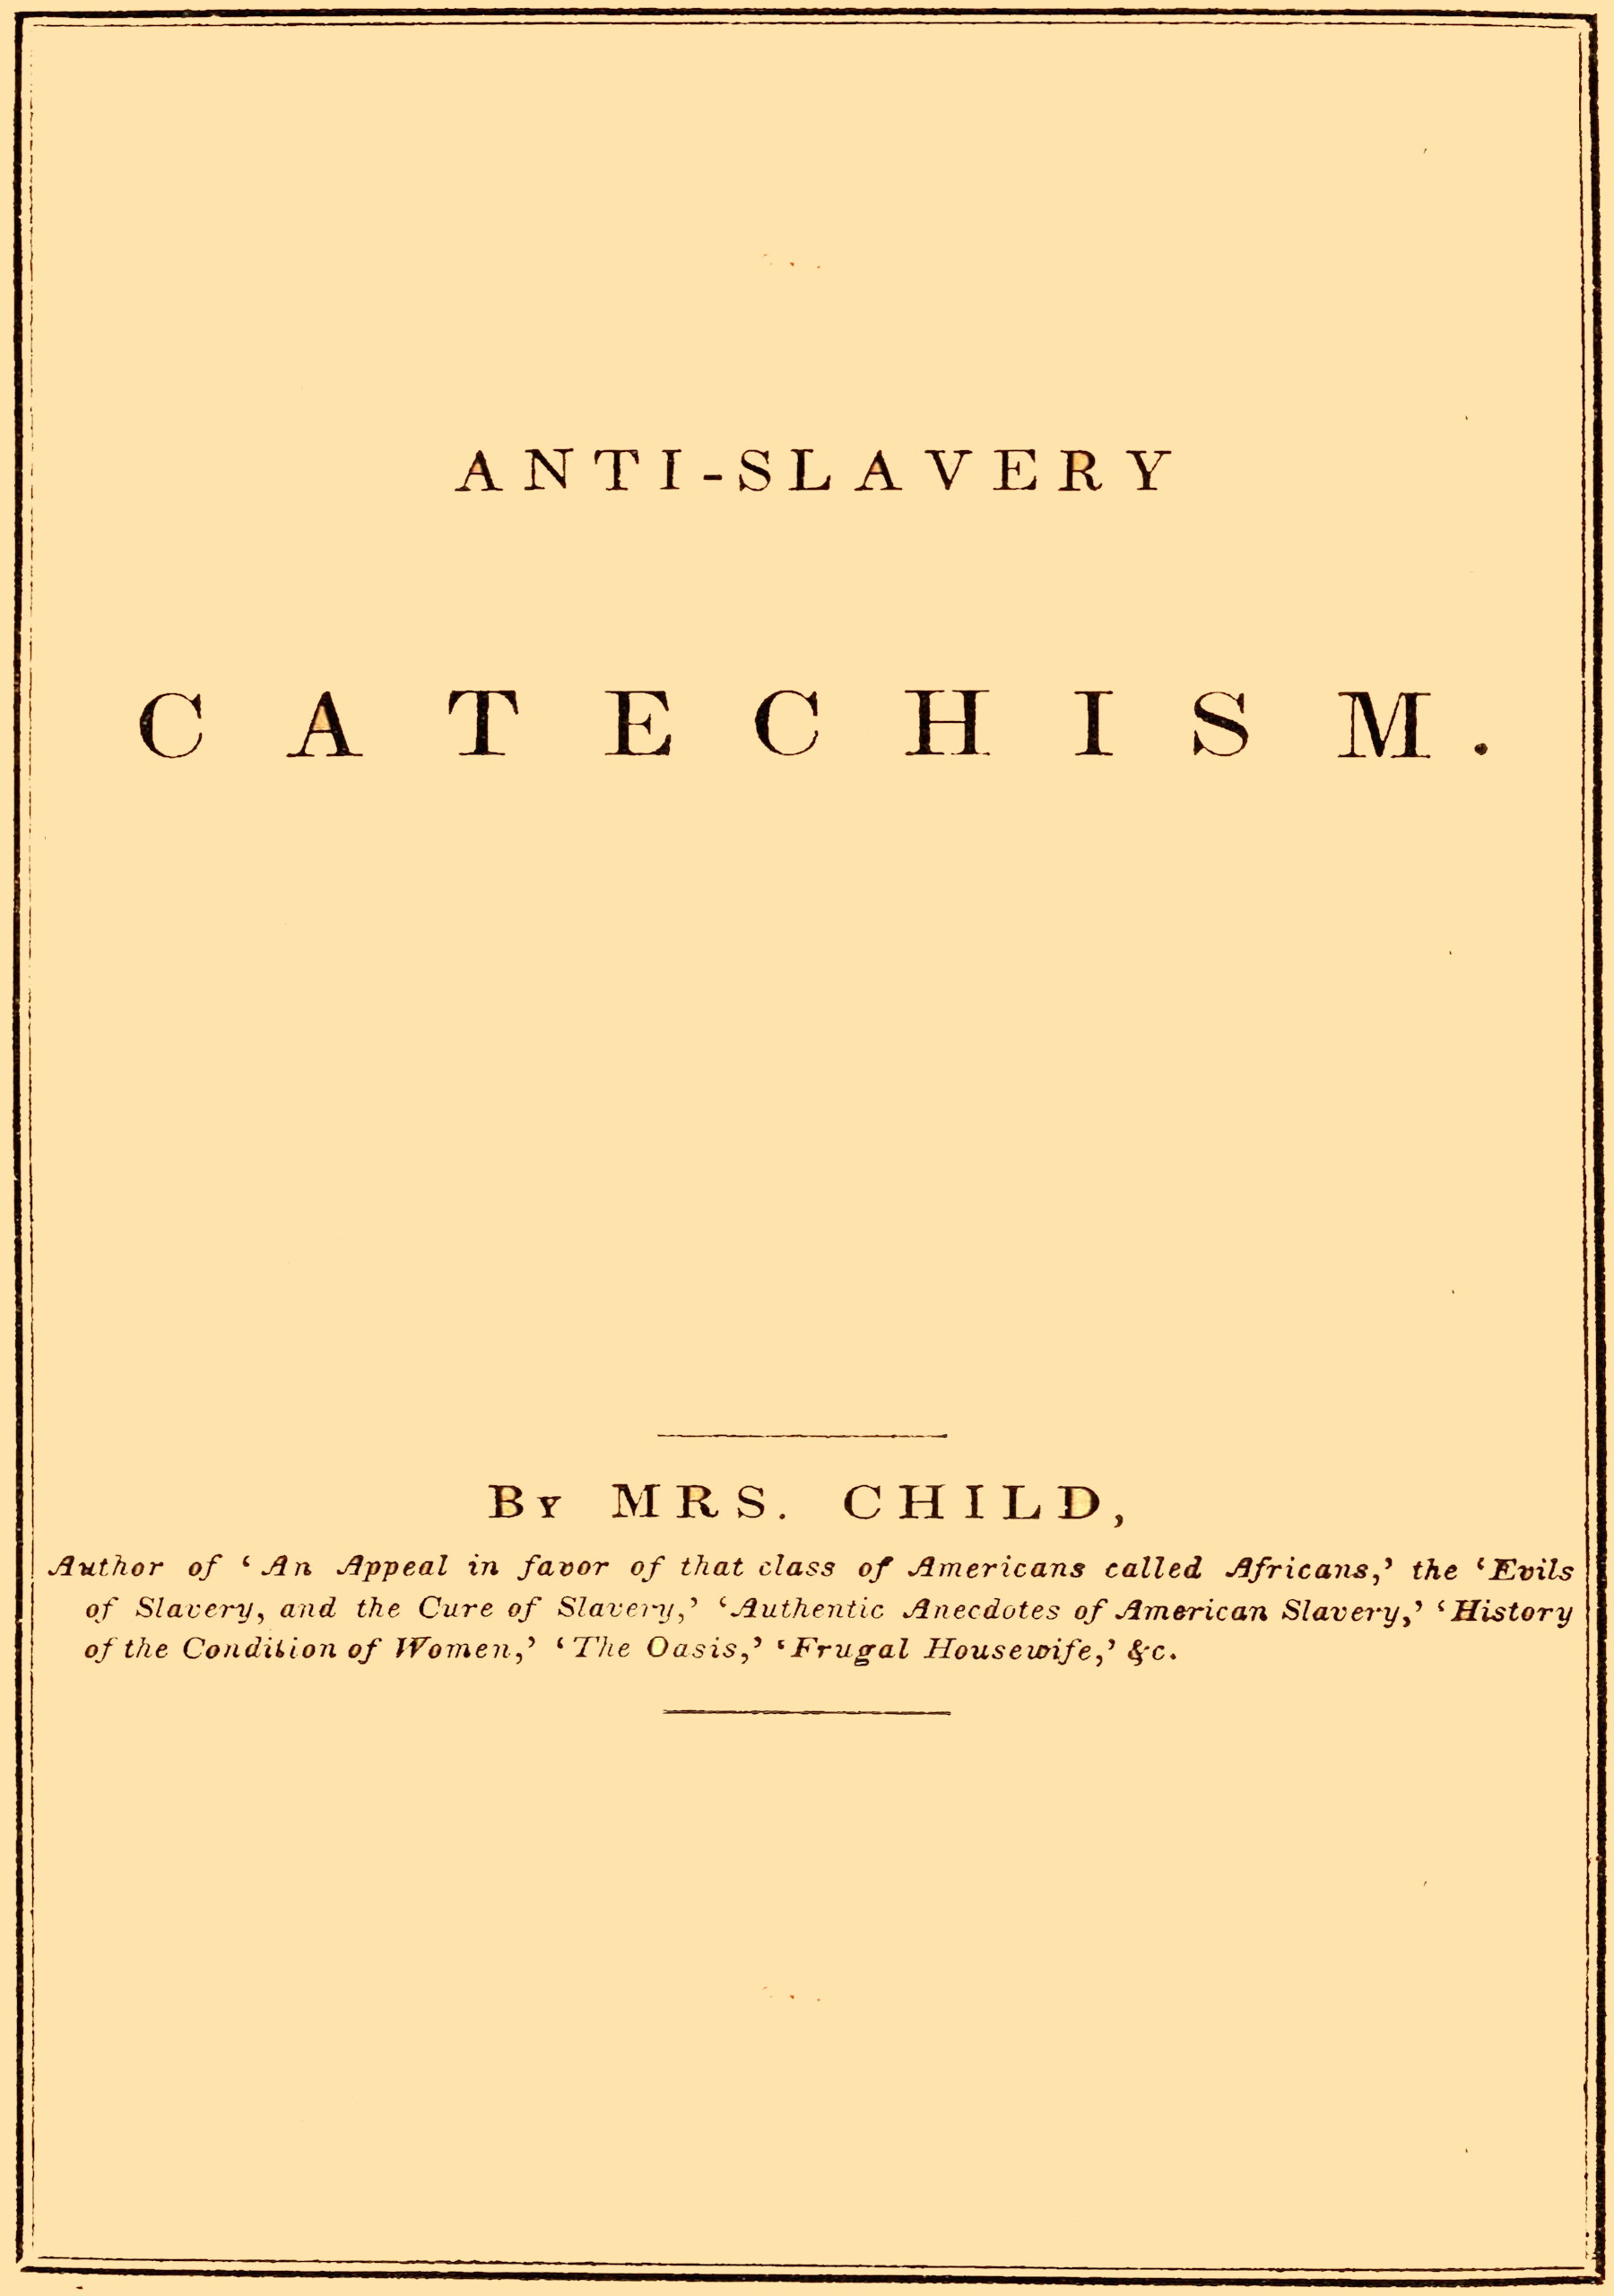 Anti-slavery catechism